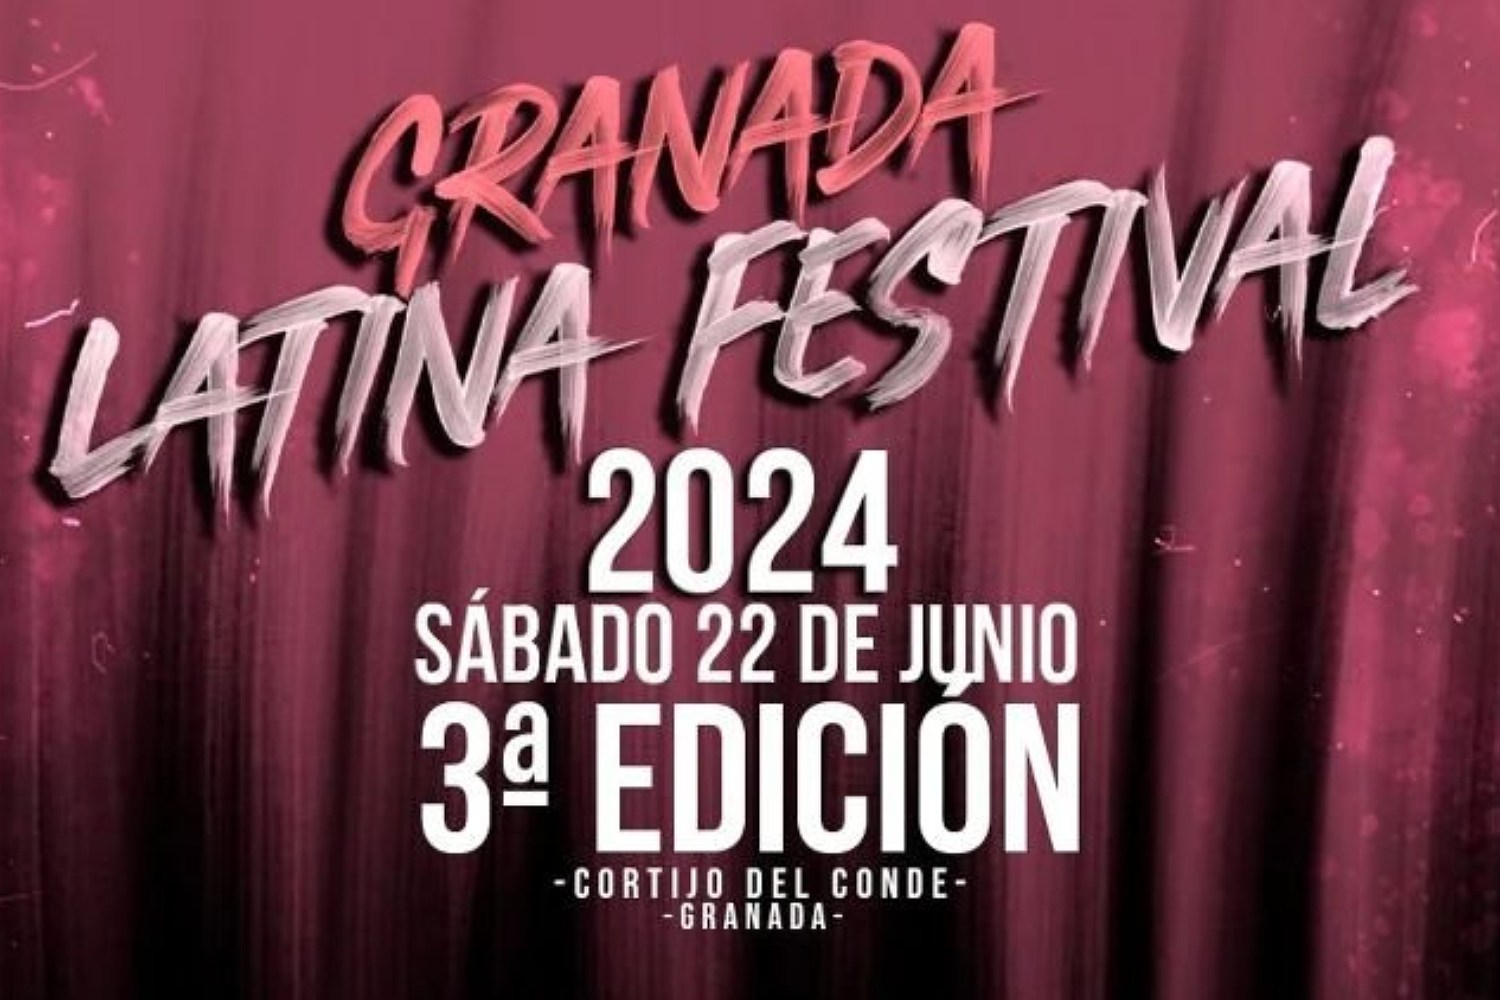 Granada Latina Festival 2024